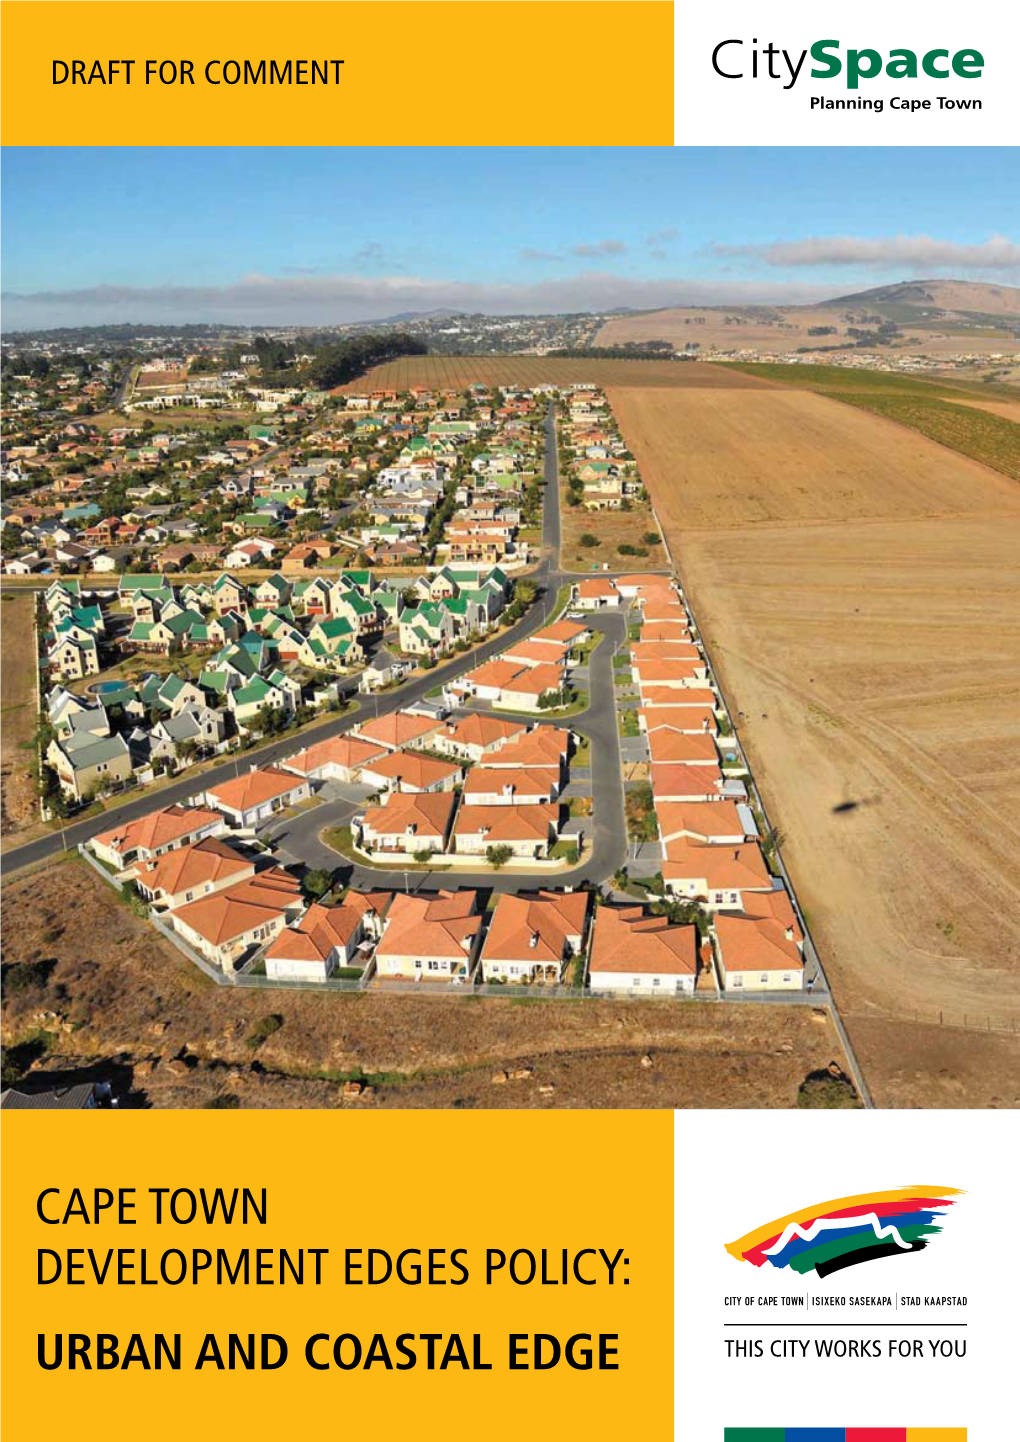 CAPE TOWN Development Edges Policy: Urban and Coastal Edge